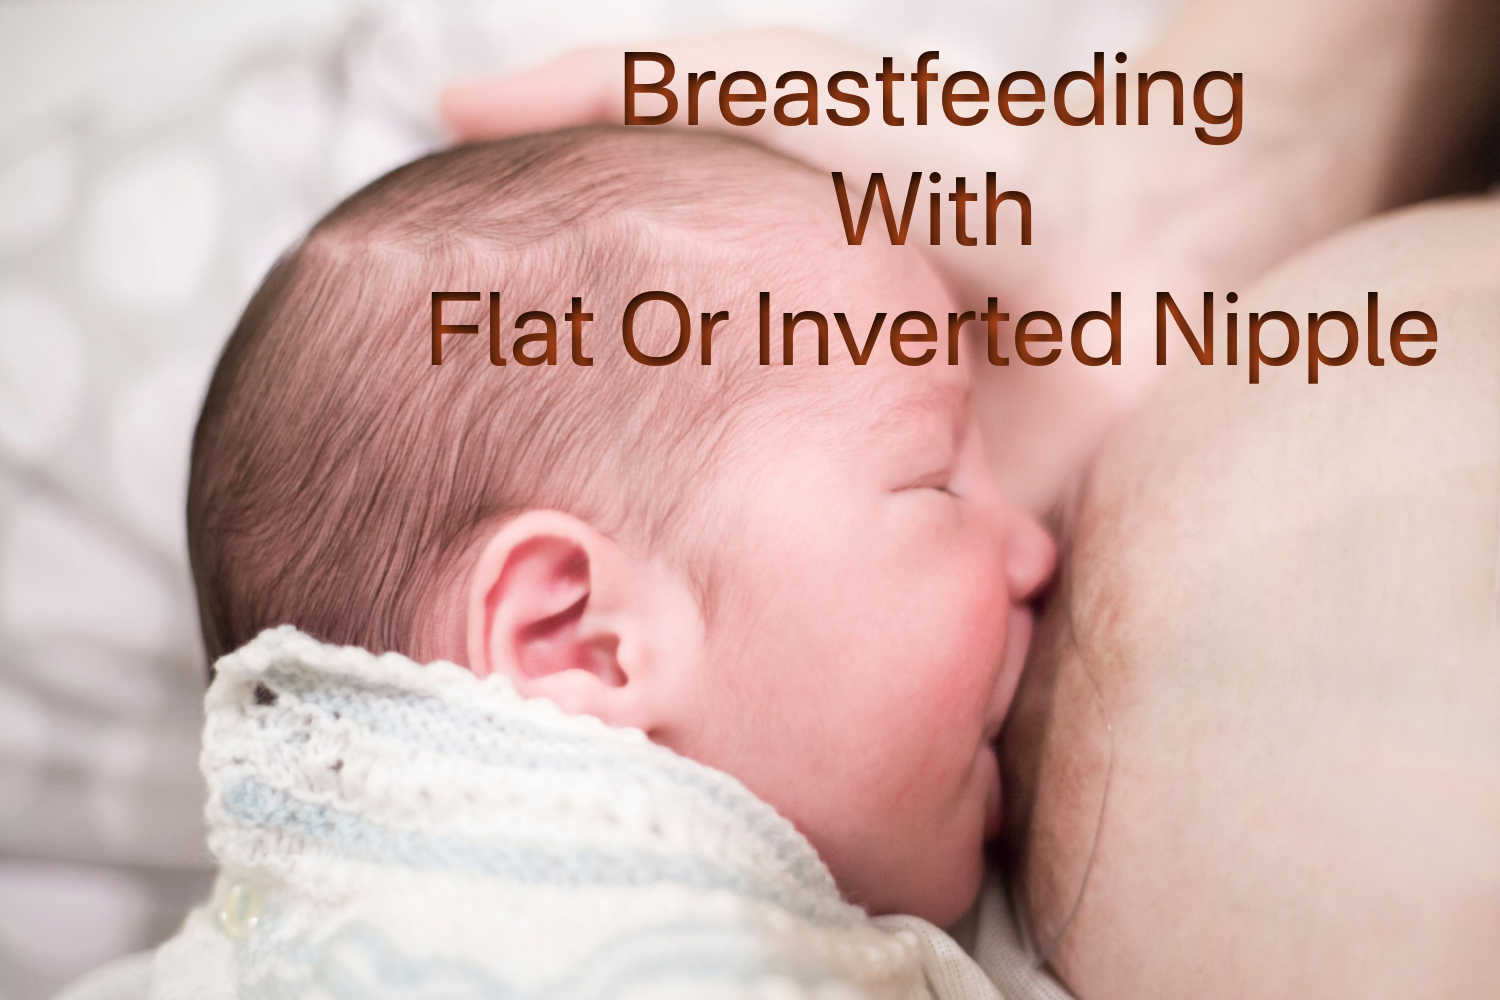 Breastfeeding With Flat Or Inverted Nipple